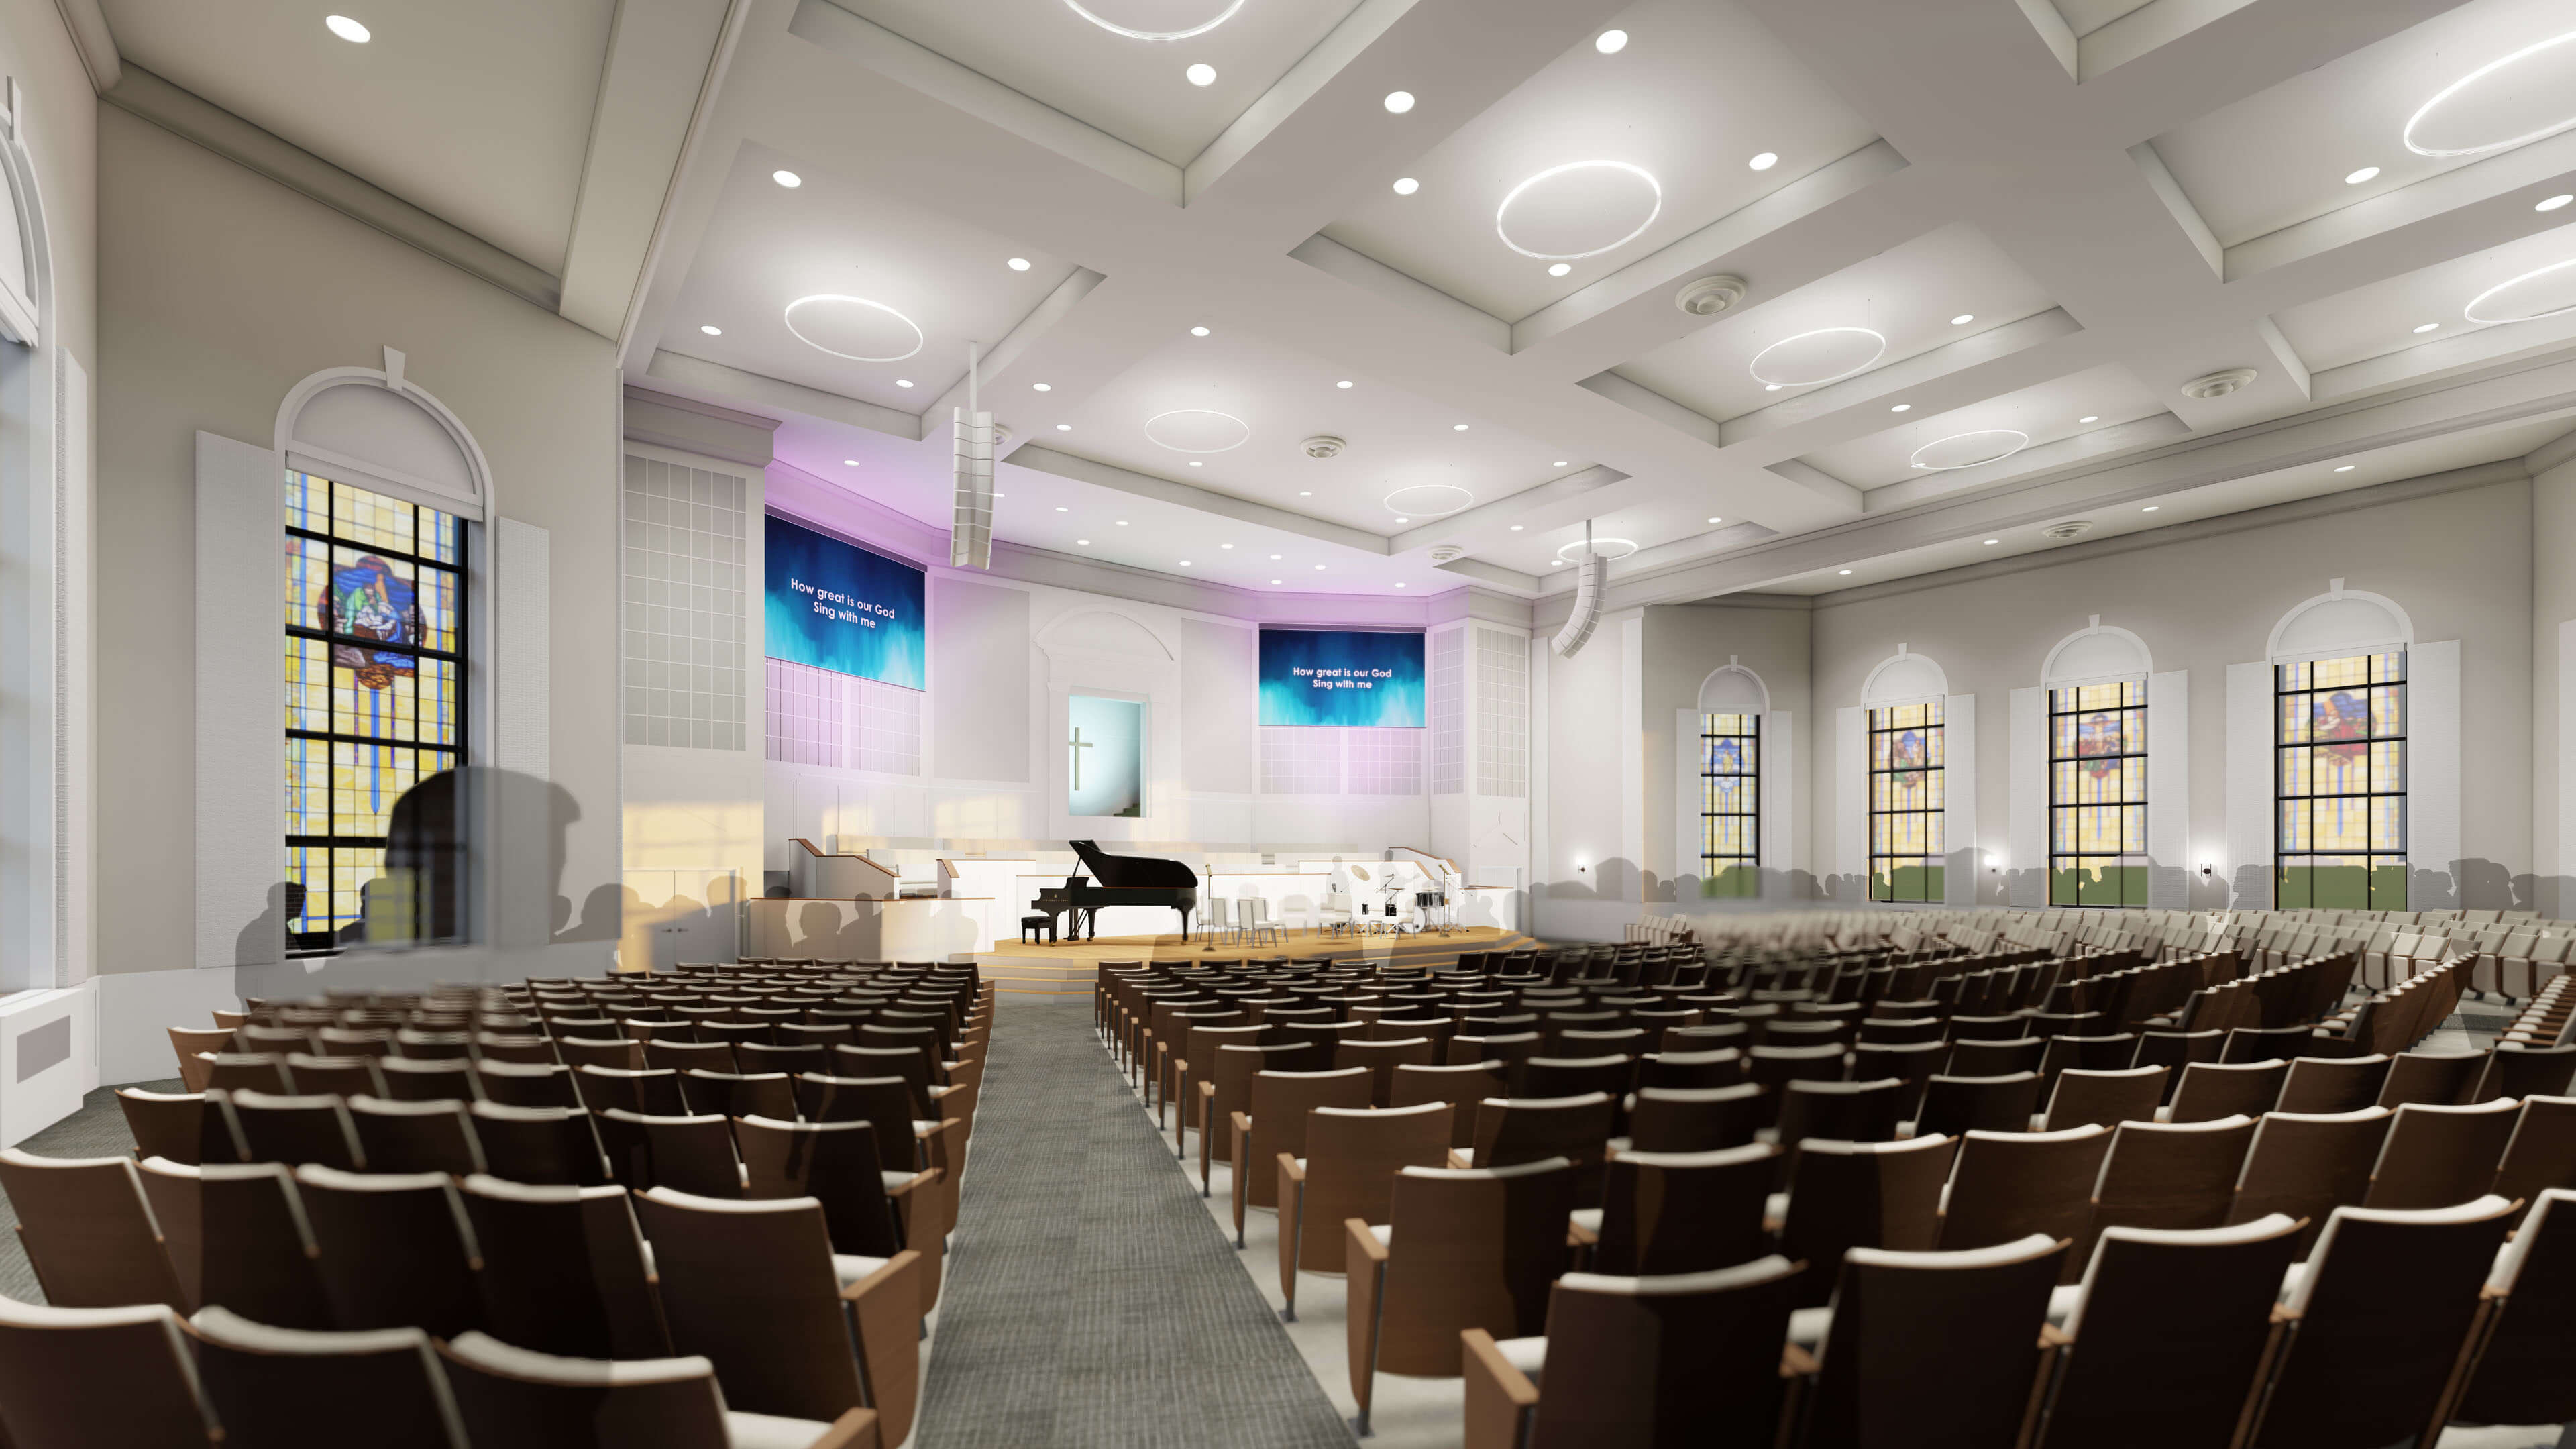 Concord Baptist Church - Primary Worship Interior Rendering